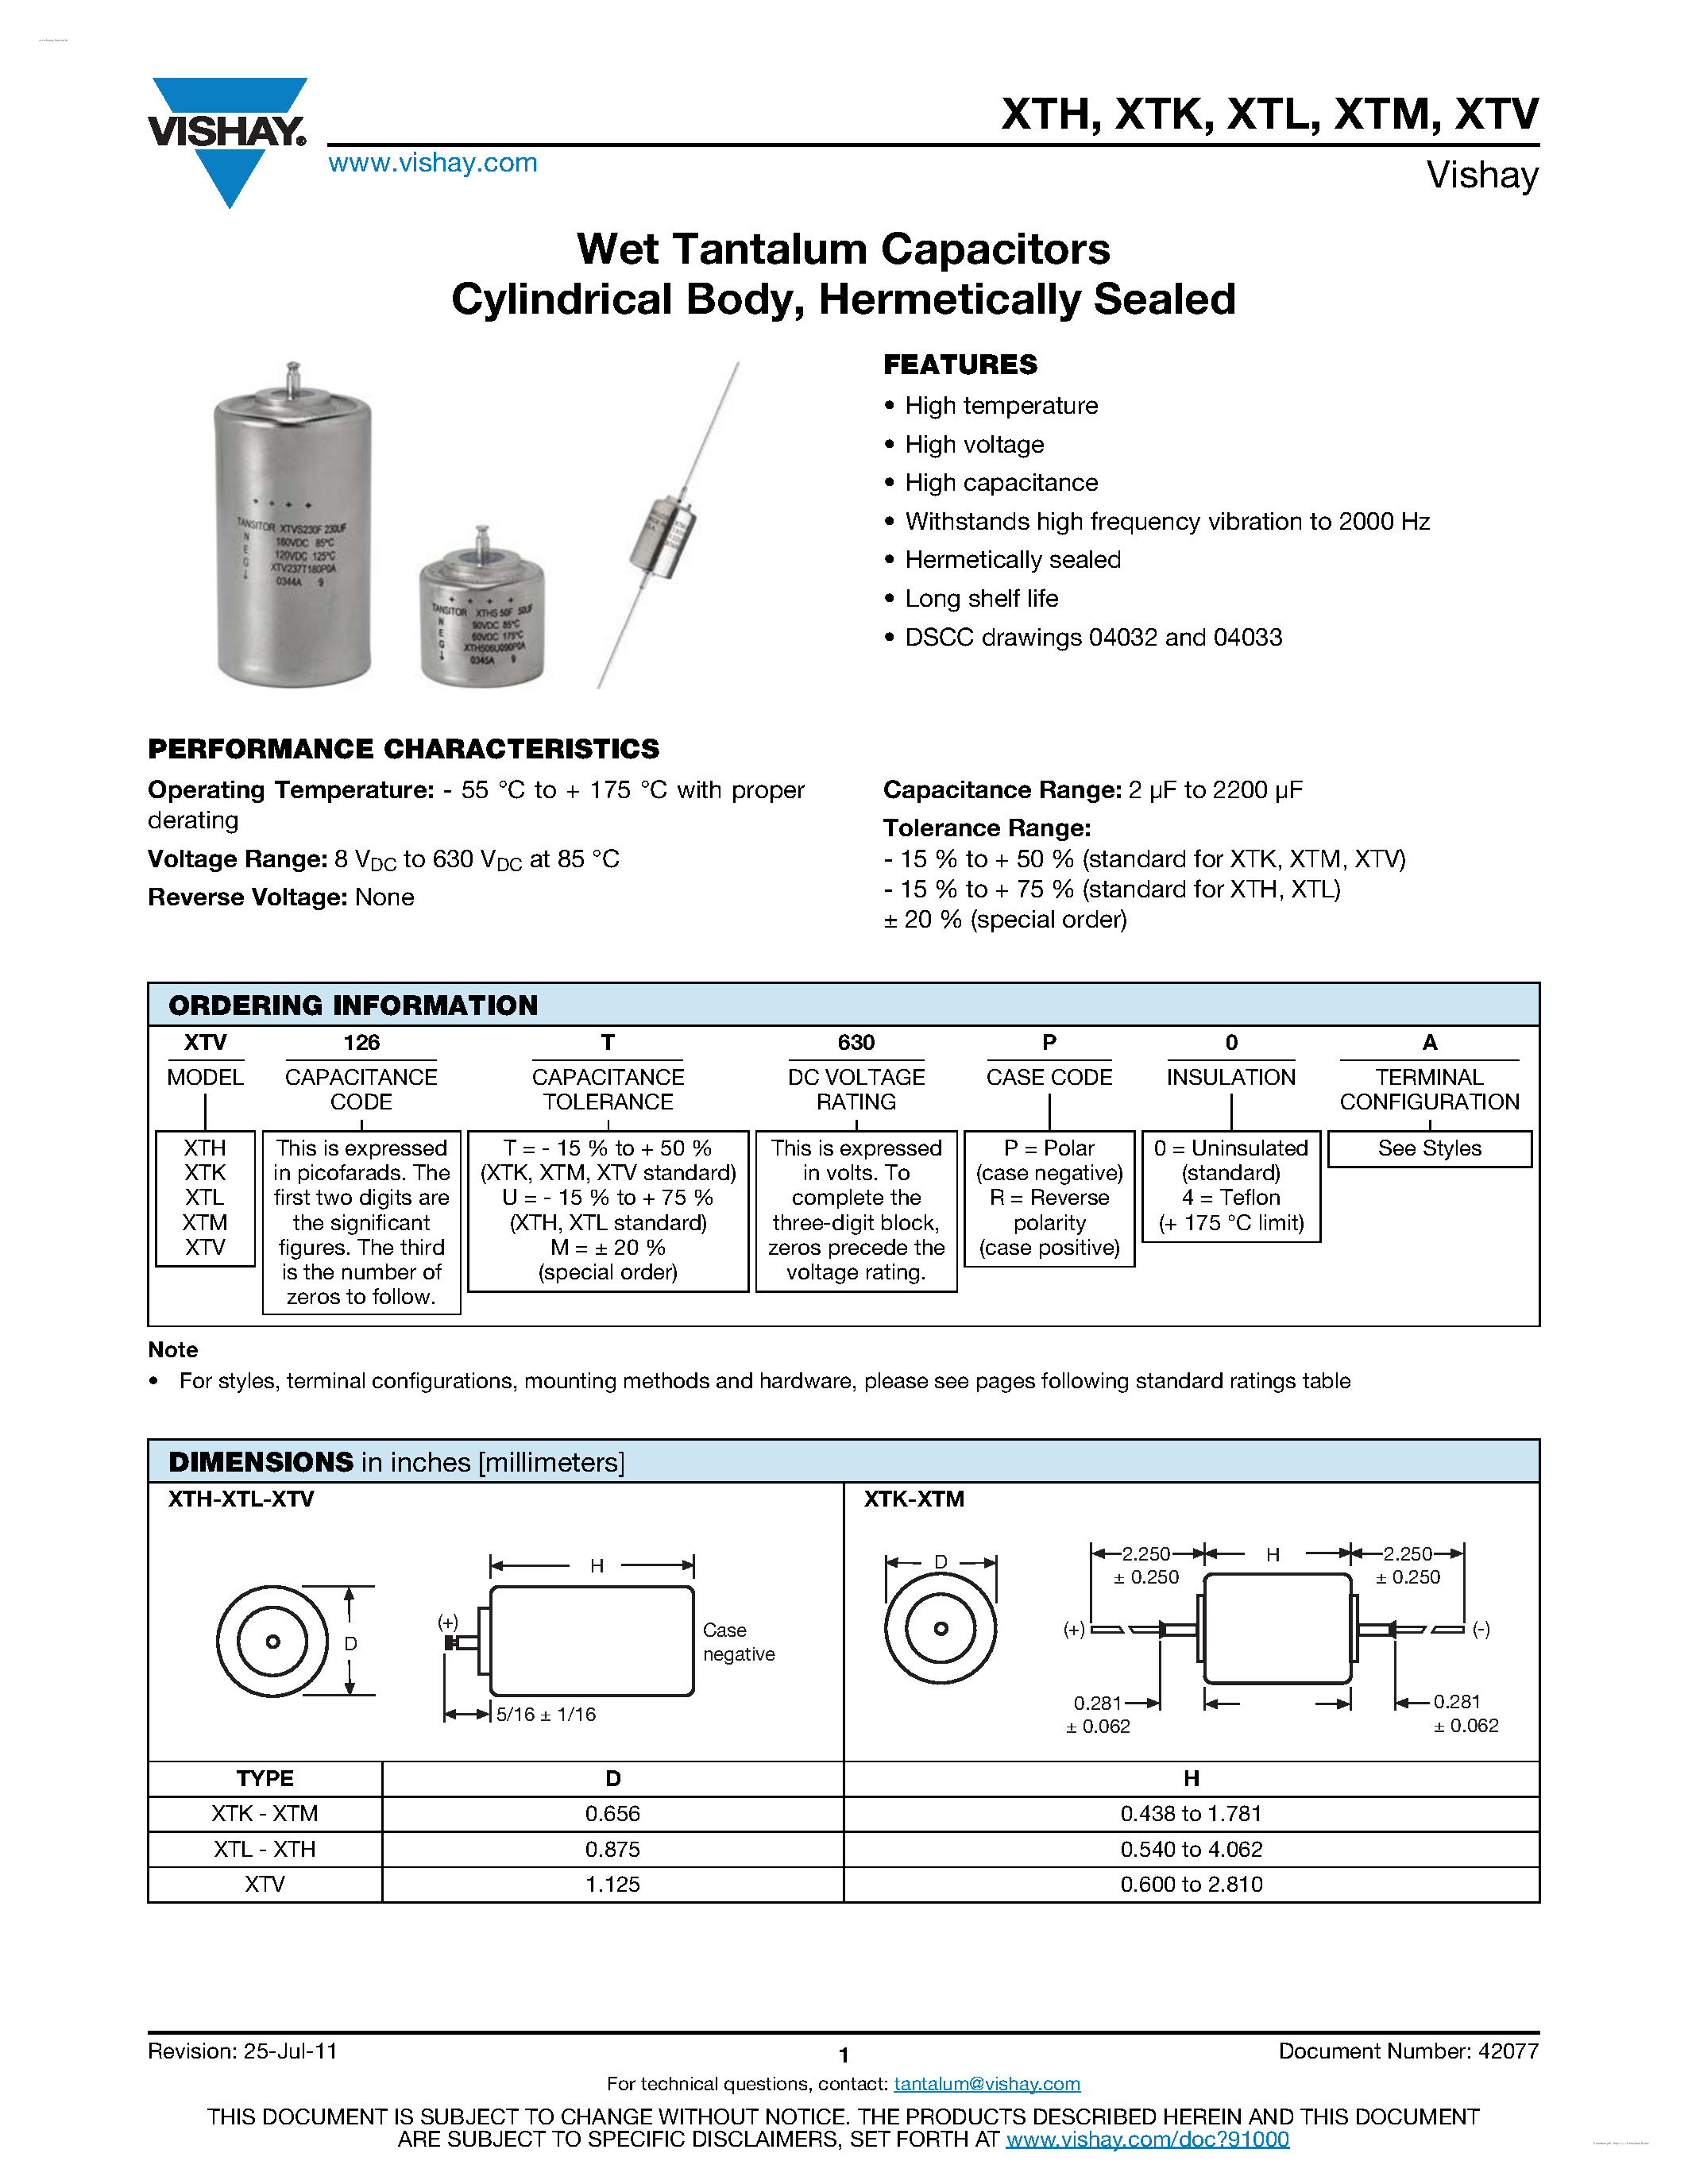 Datasheet XTV - Wet Tantalum Capacitors page 1